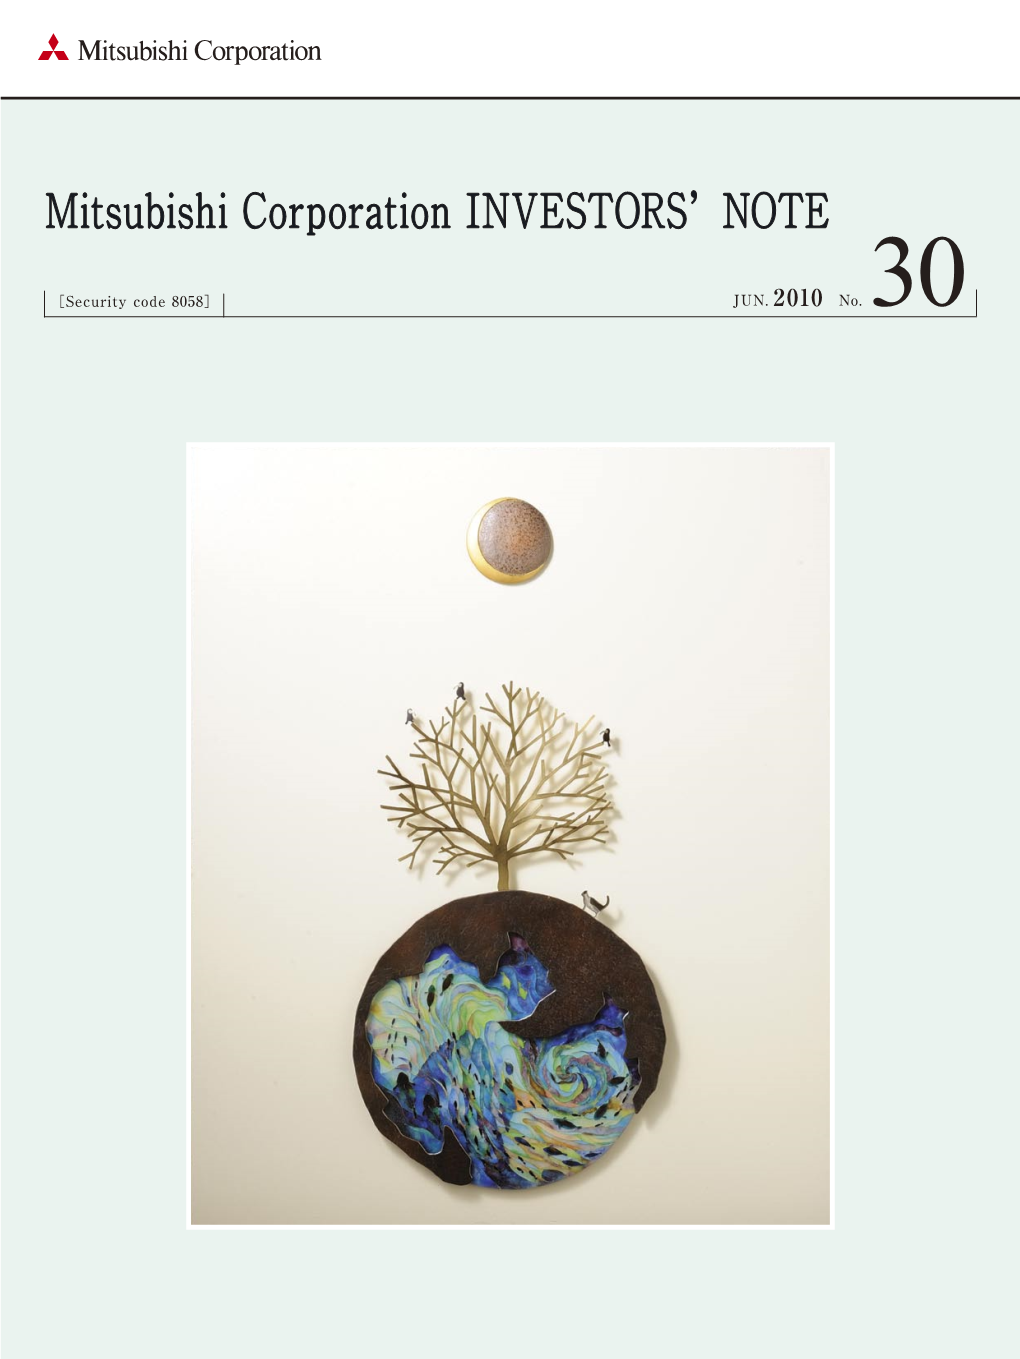 Mitsubishi Corporation INVESTORS'note